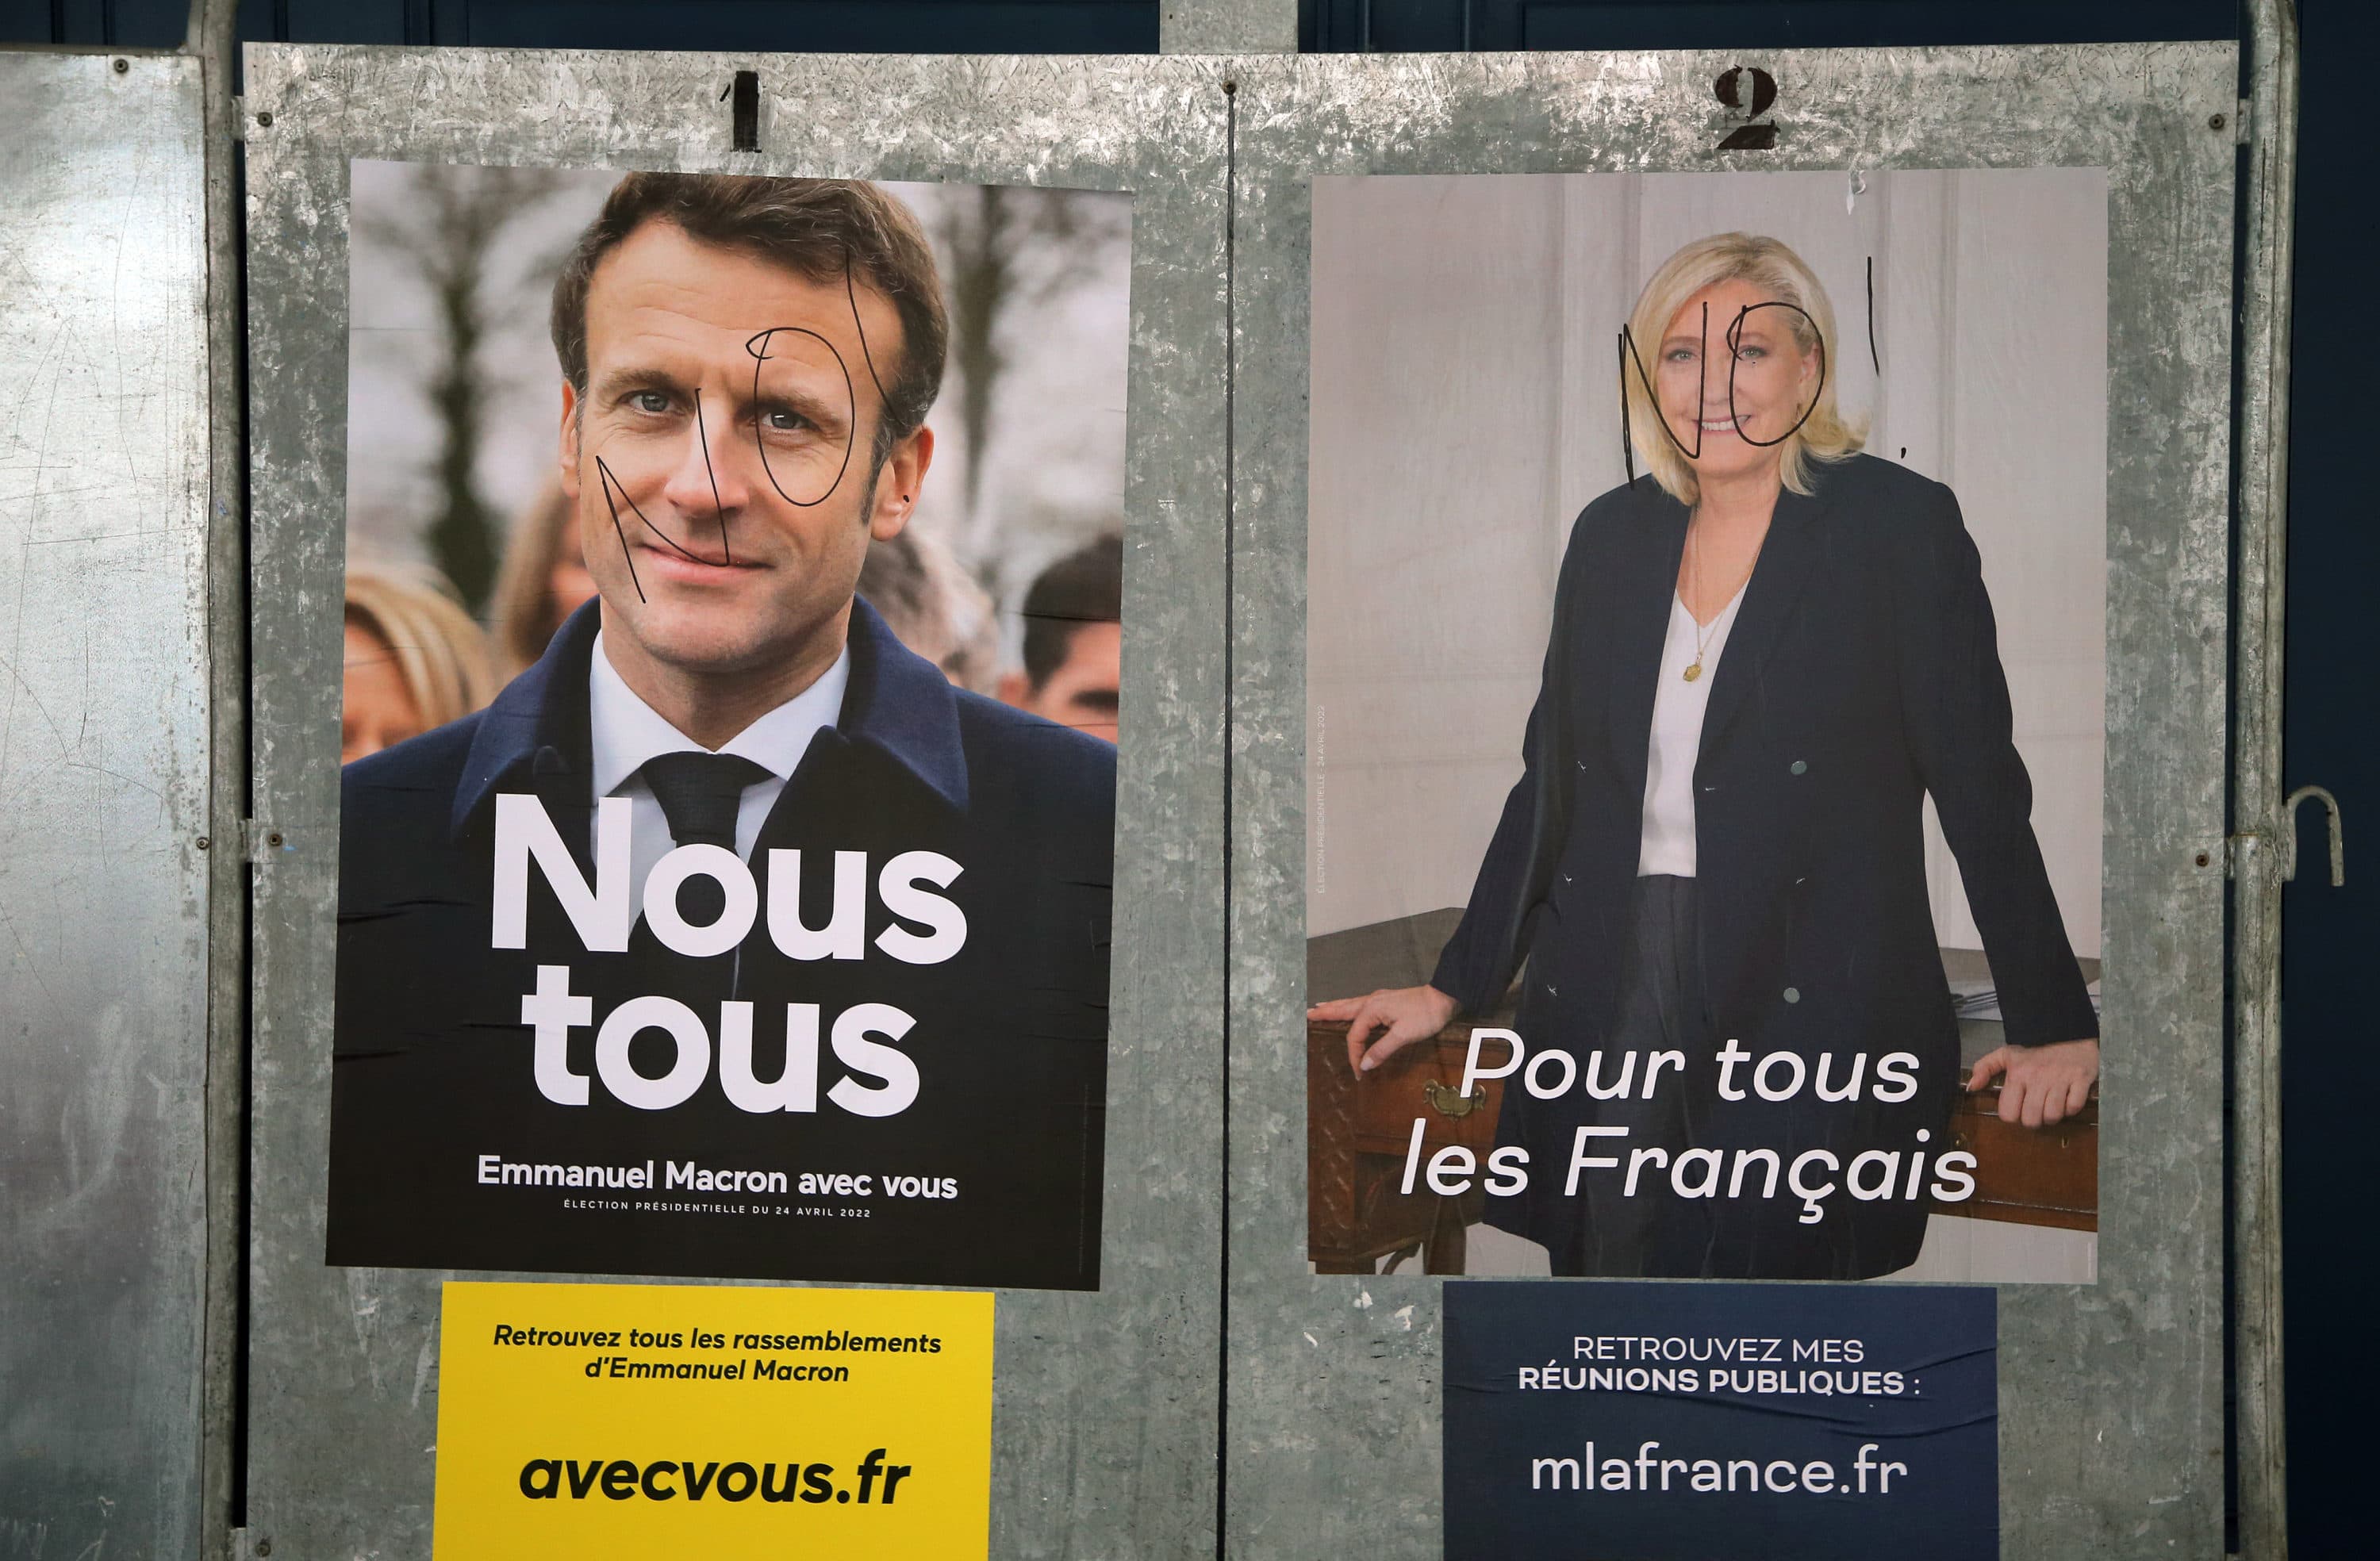 French far-right leader Marine Le Pen announces 2022 presidential bid